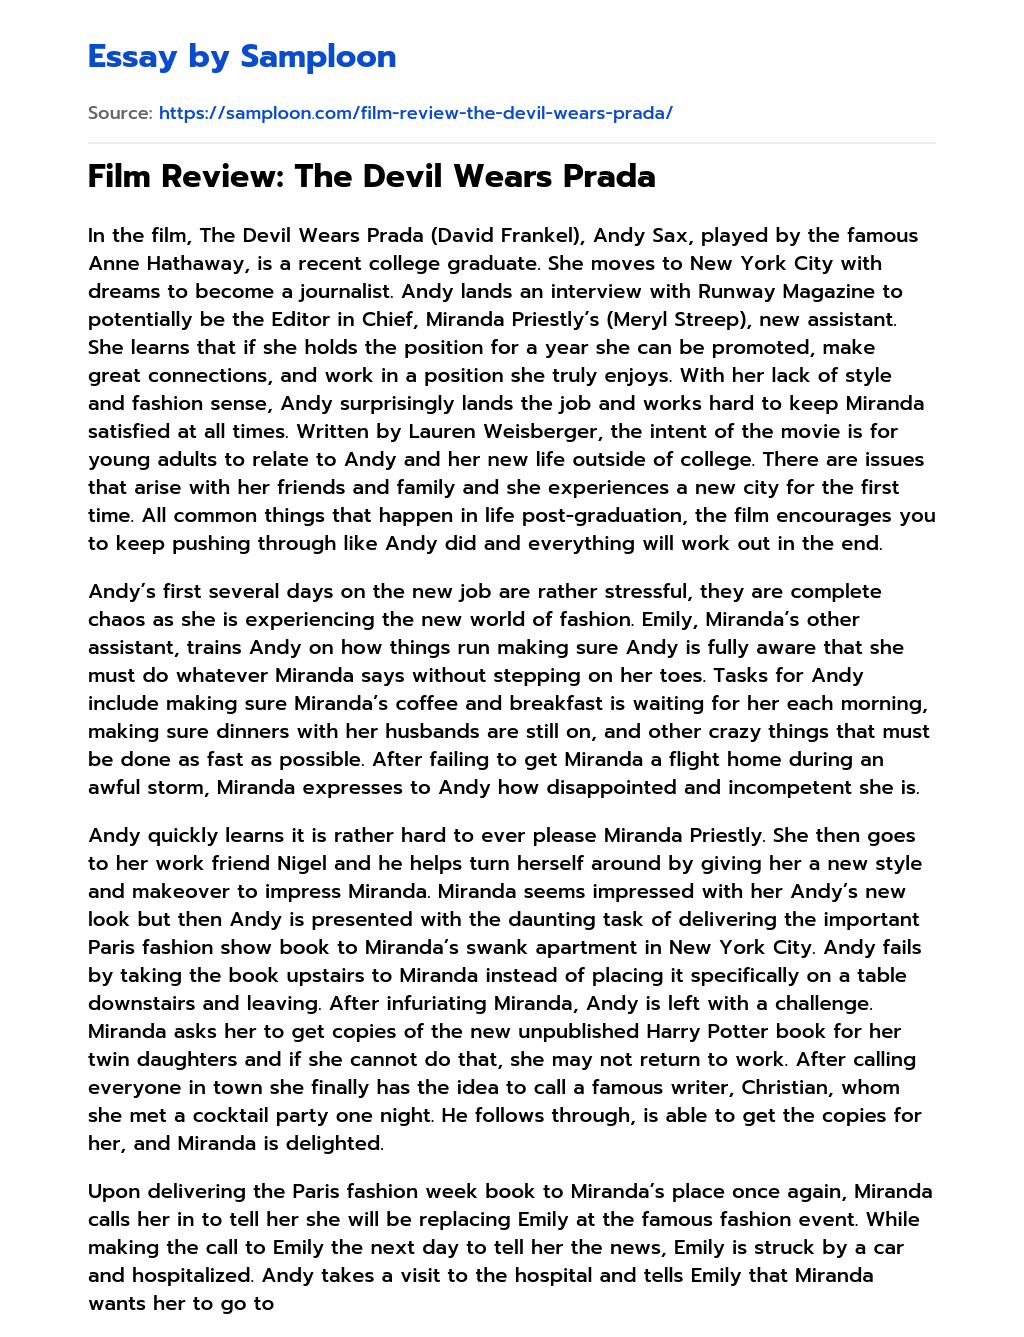 Film Review: The Devil Wears Prada essay